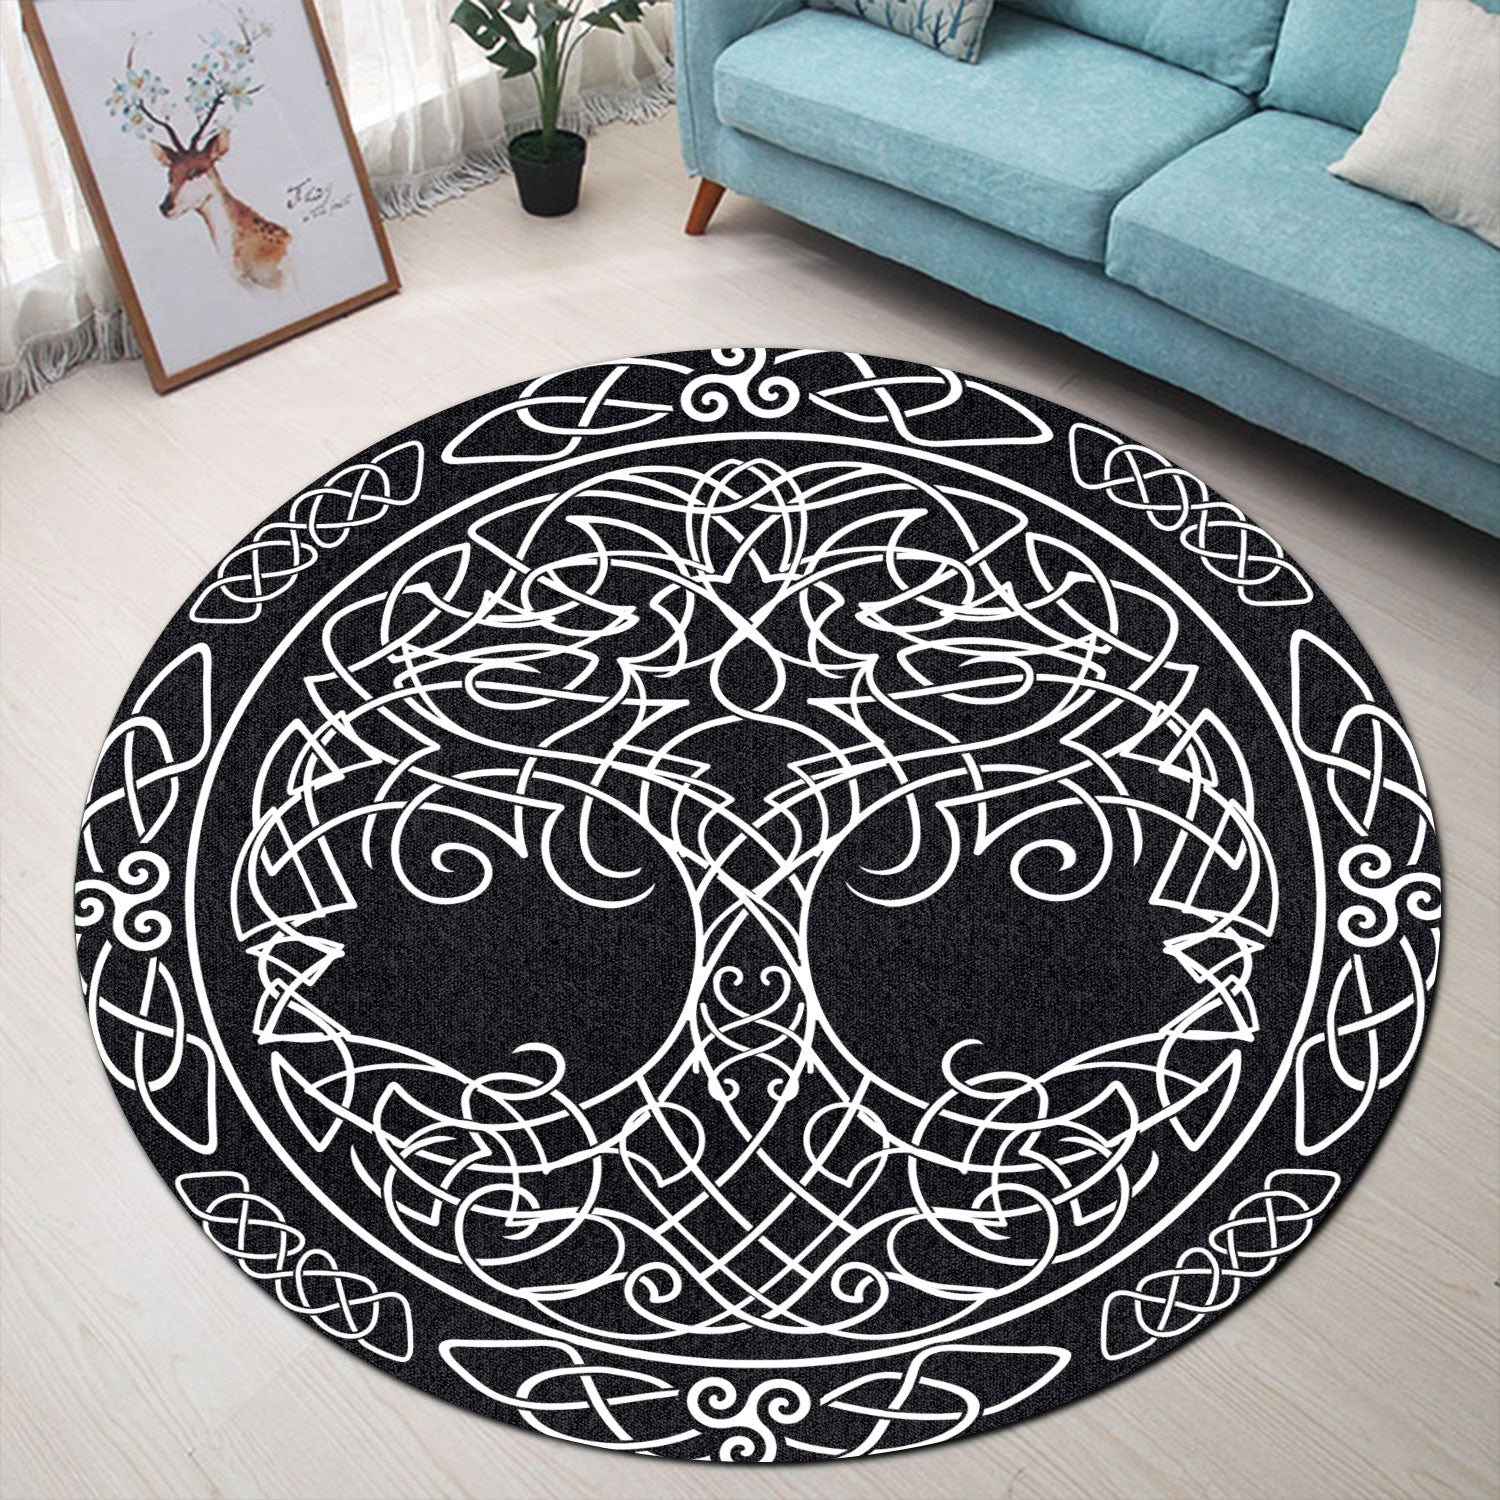 viking-carpet-yggdrasil-tree-of-life-round-carpet